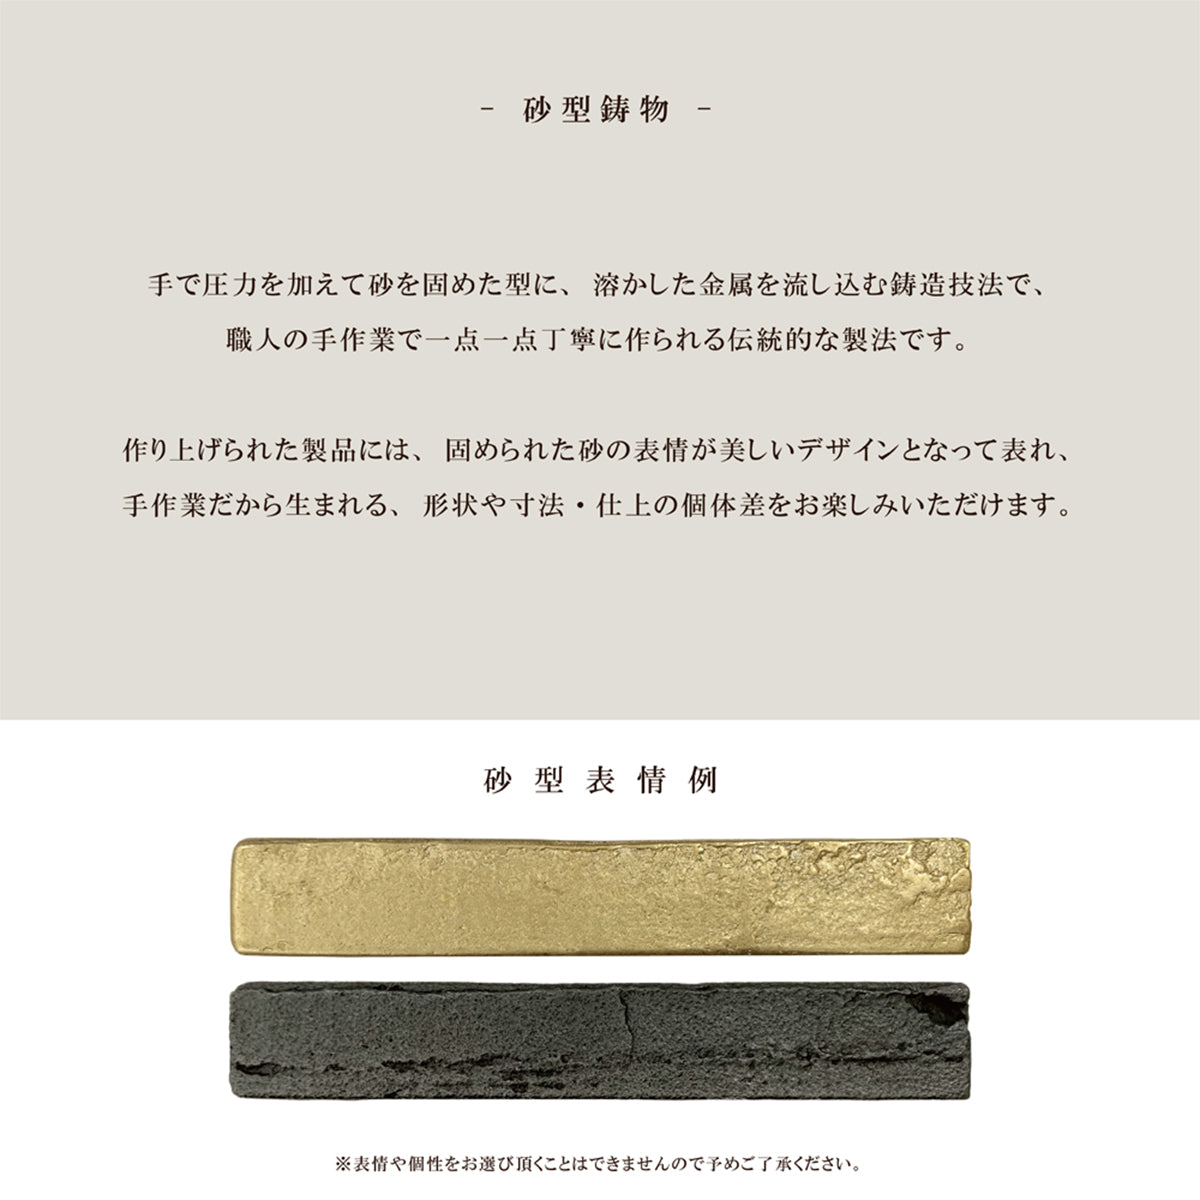 Brass Casting 真鍮鋳物 ハンドル (小型 黒染め HB-202)